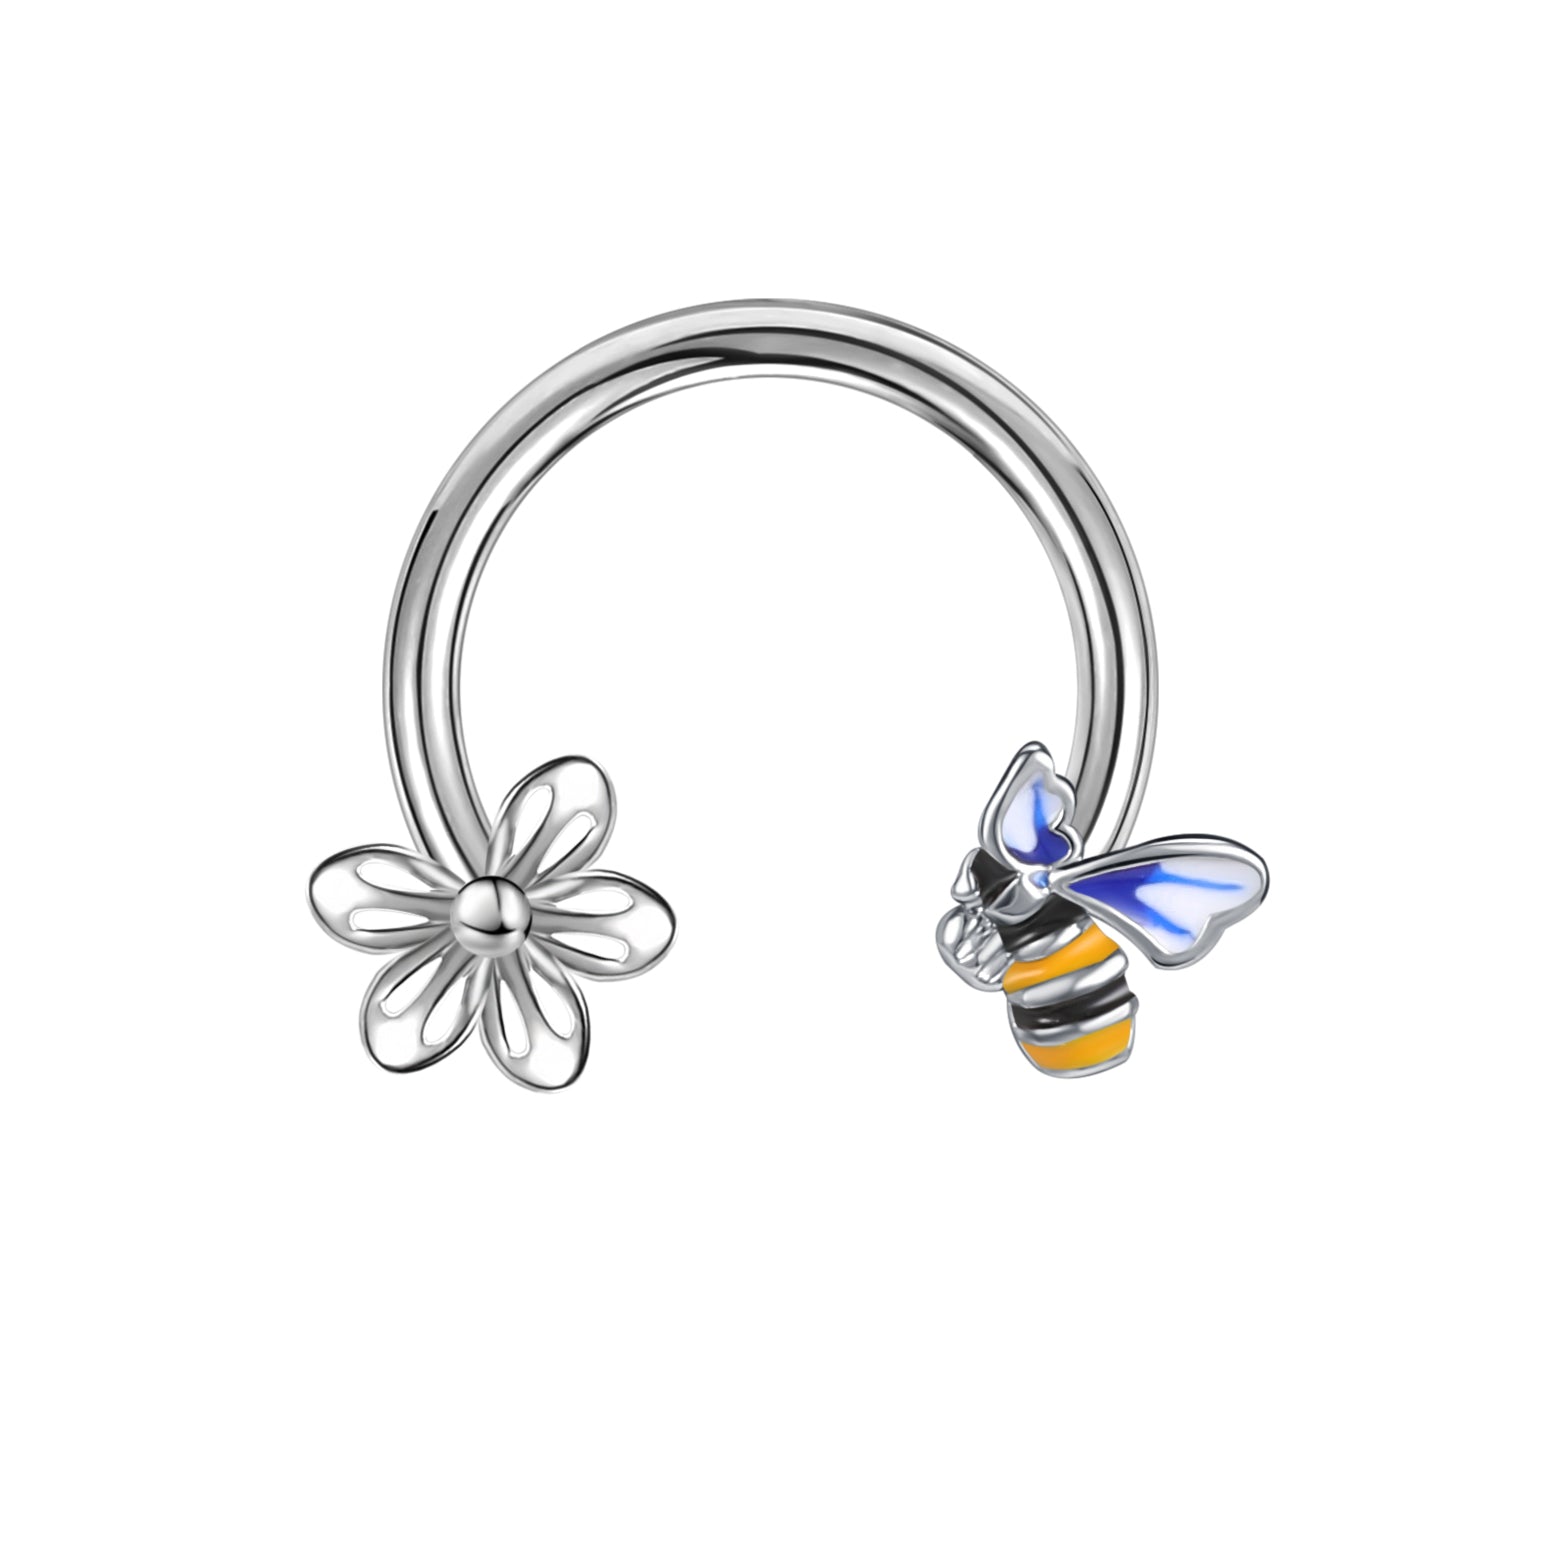 16g-flower-bee-nose-septum-ring-cartilage-helix-piercing